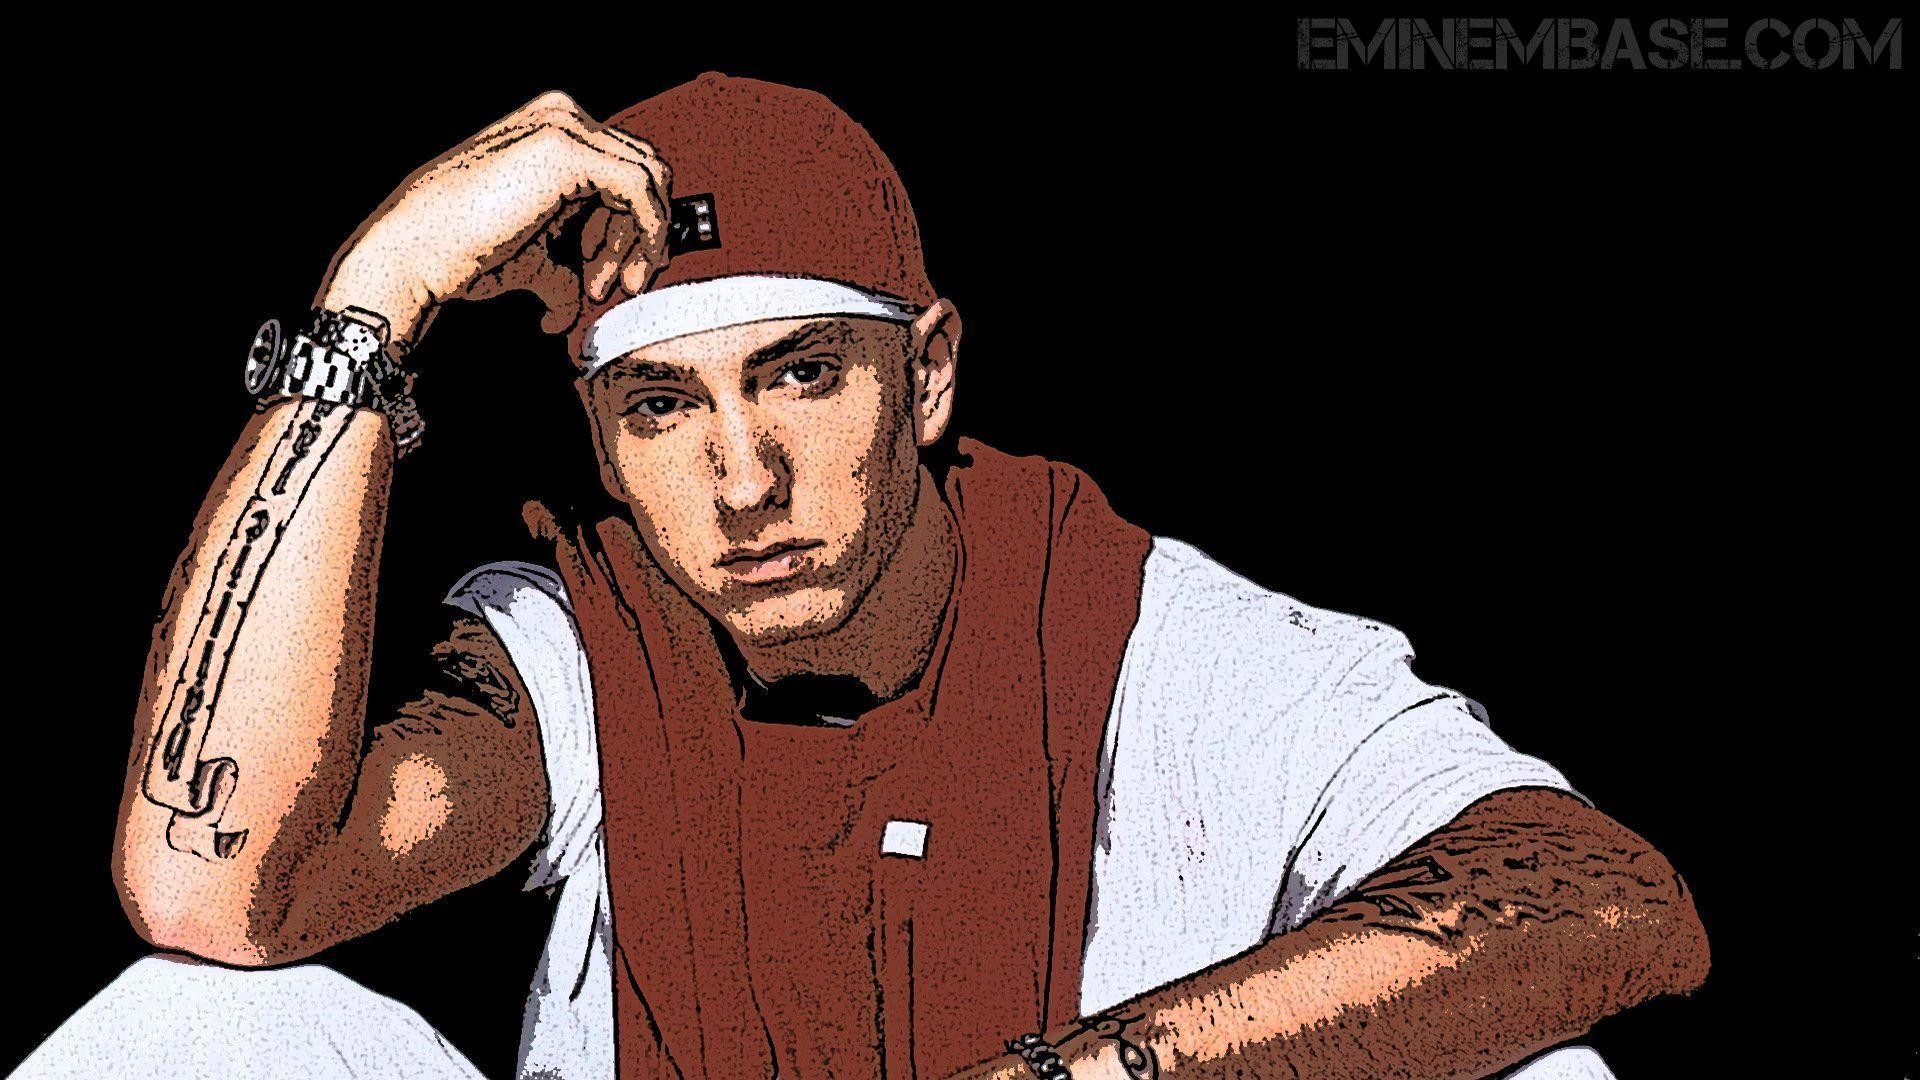 Eminem Wallpaper 8 Mile ·① WallpaperTag